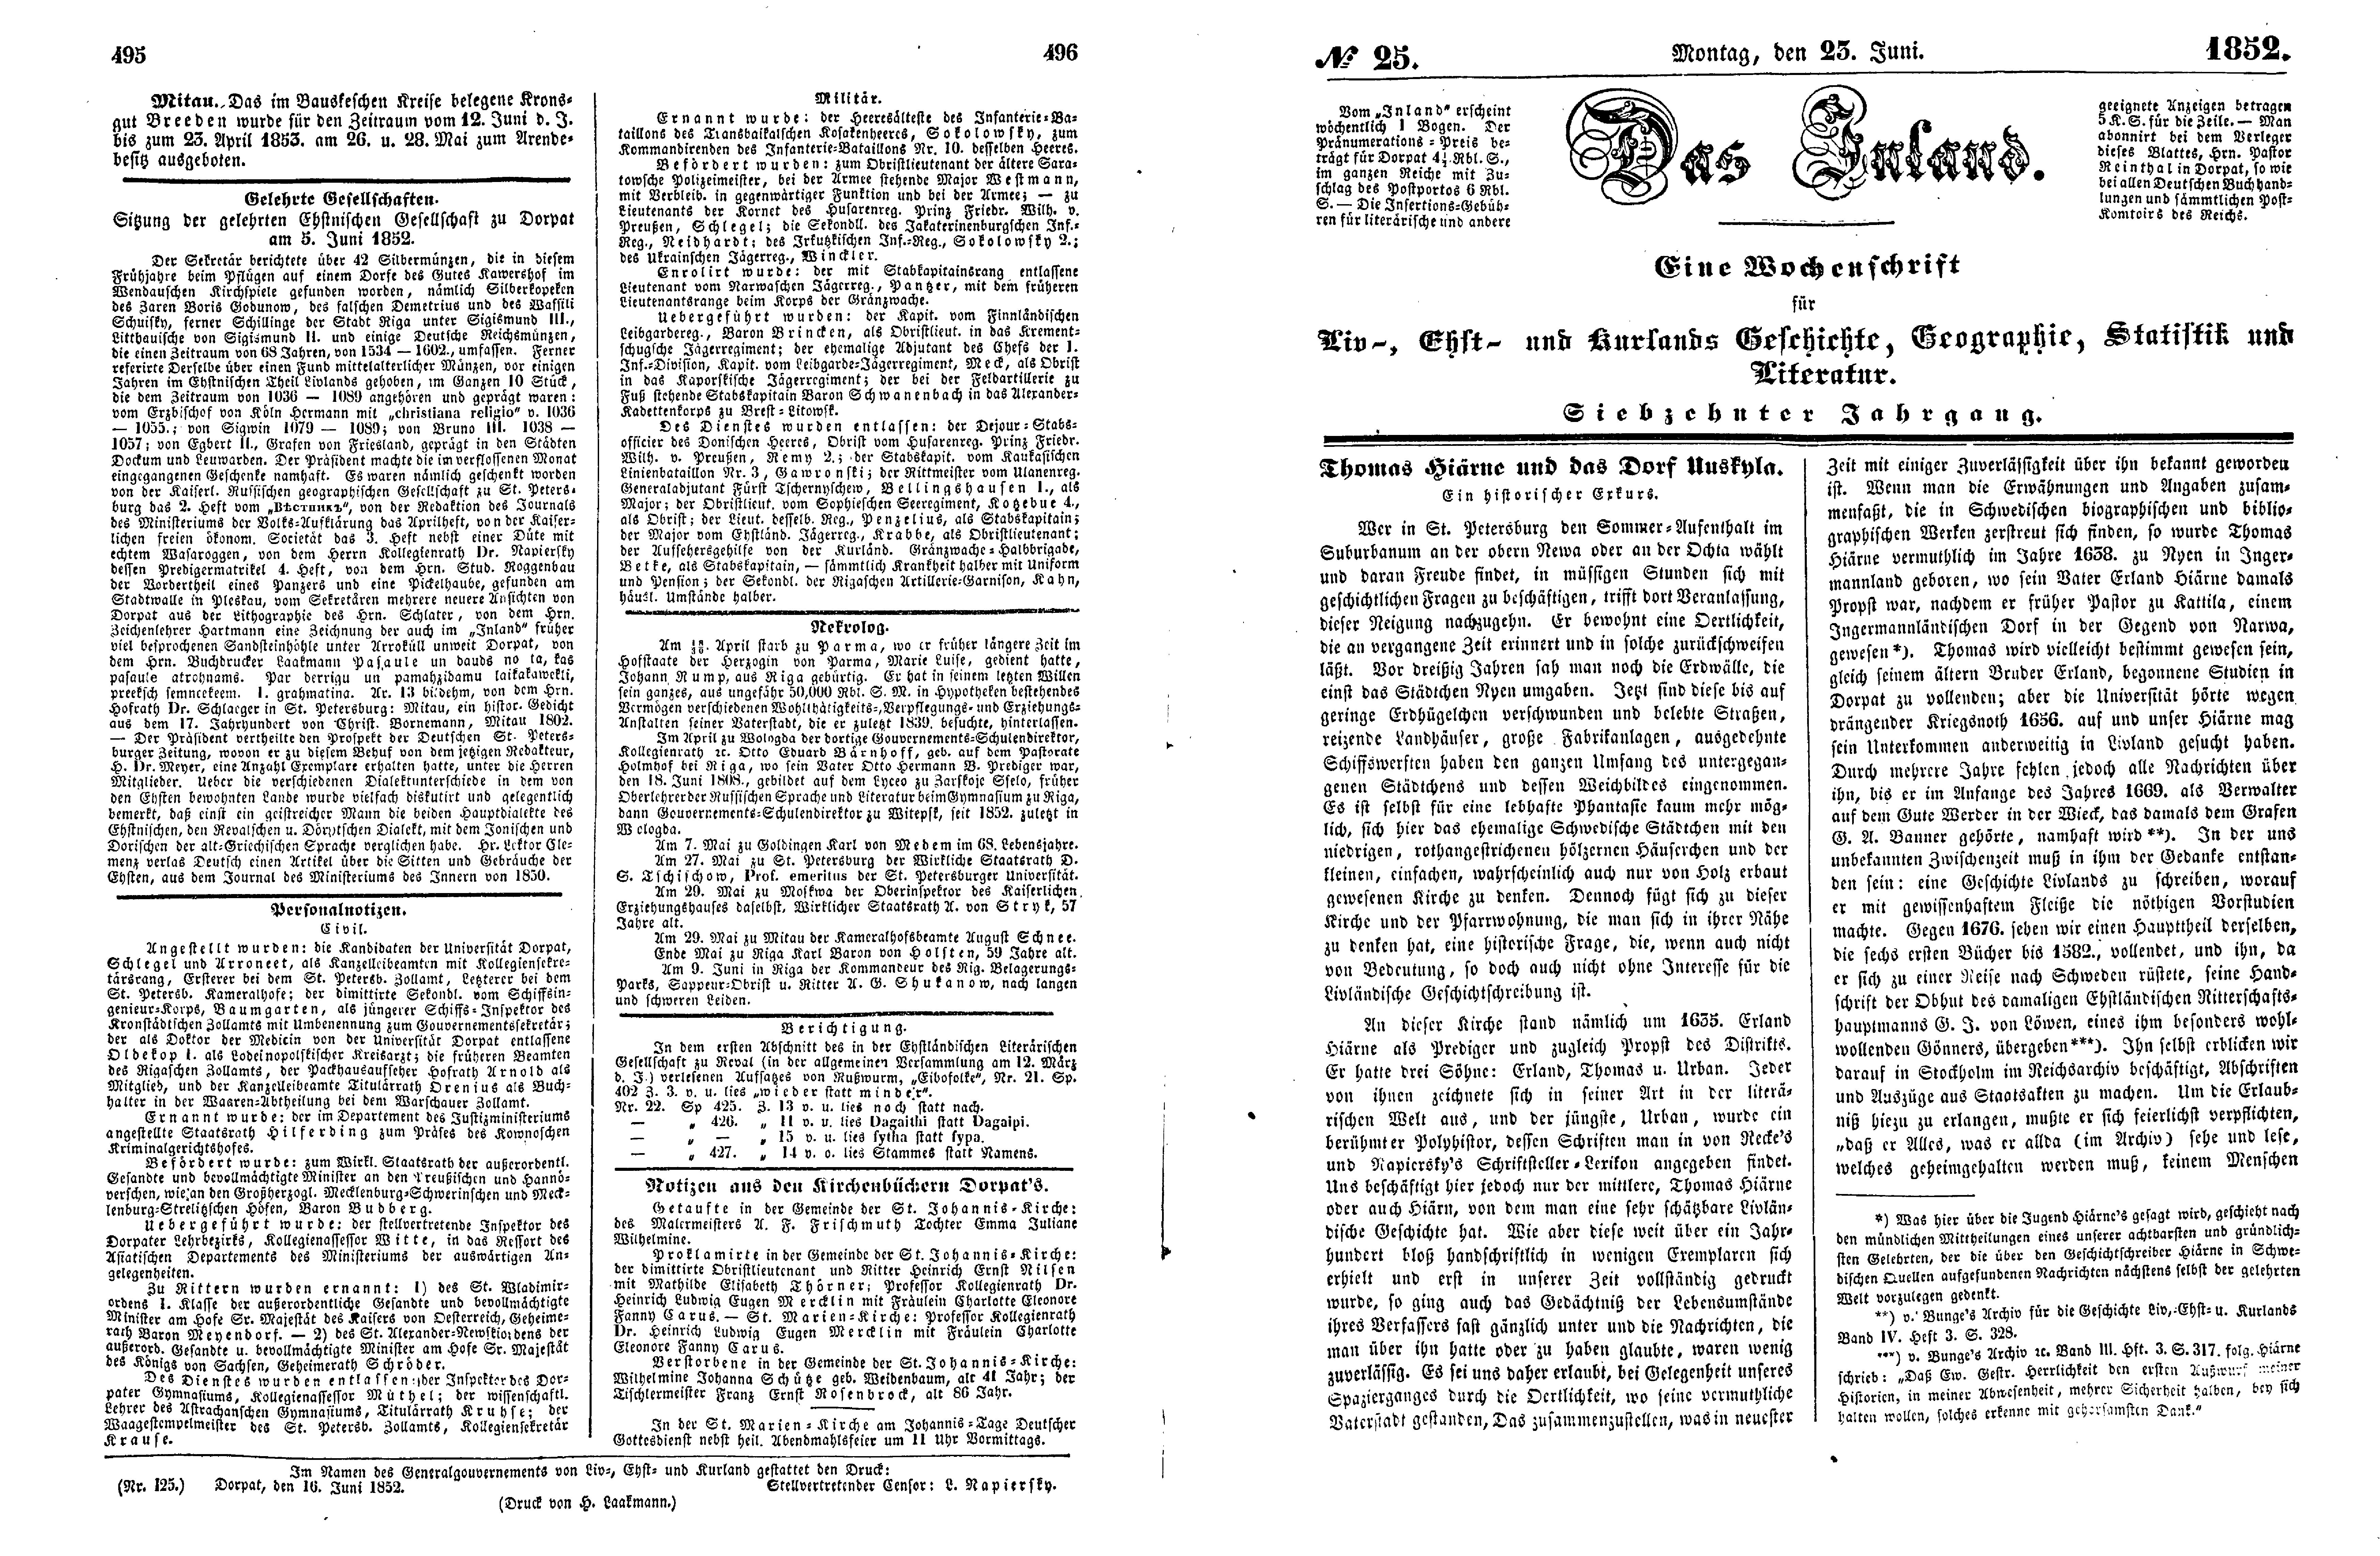 Das Inland [17] (1852) | 128. (495-498) Main body of text